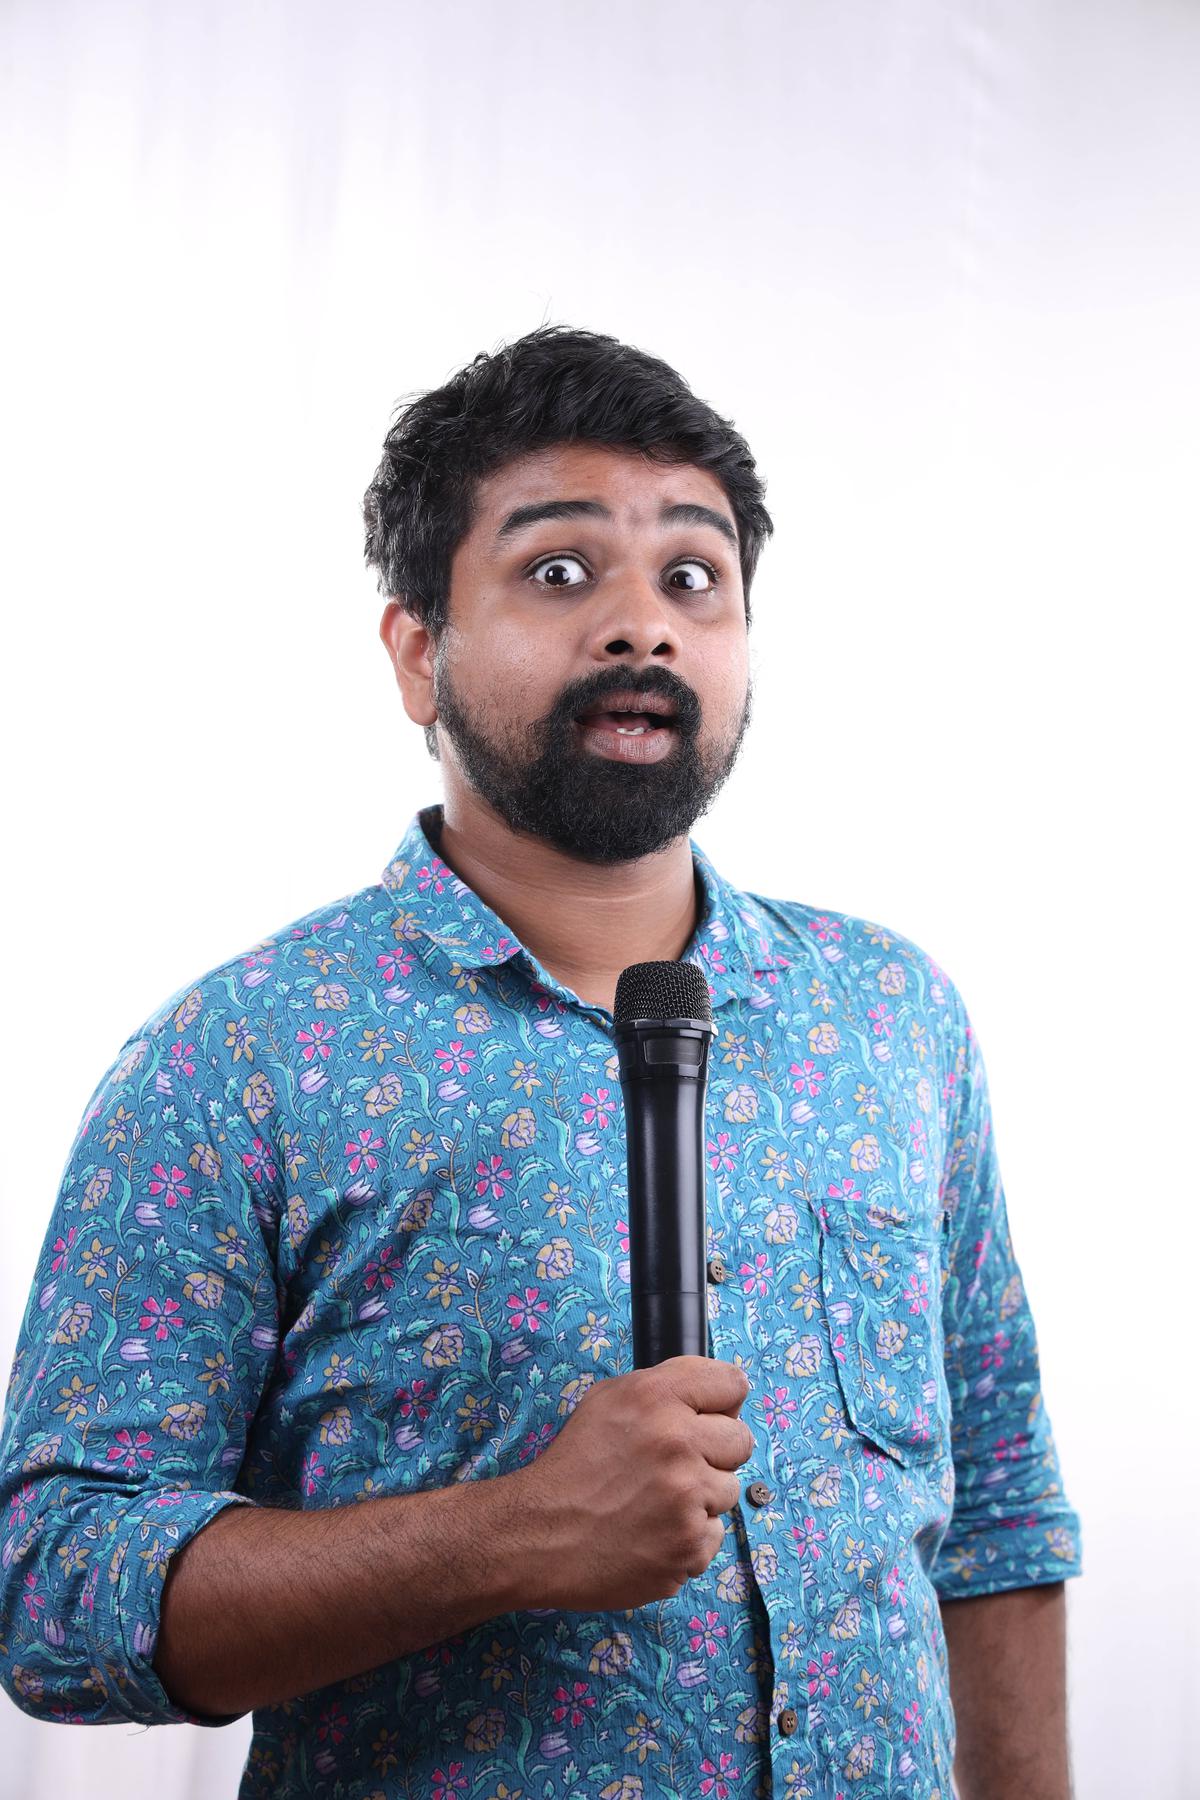 Malayalam stand-up comedian Sabareesh Narayanan’s show ‘Truly Malayali’ is an updated take on stereotypes